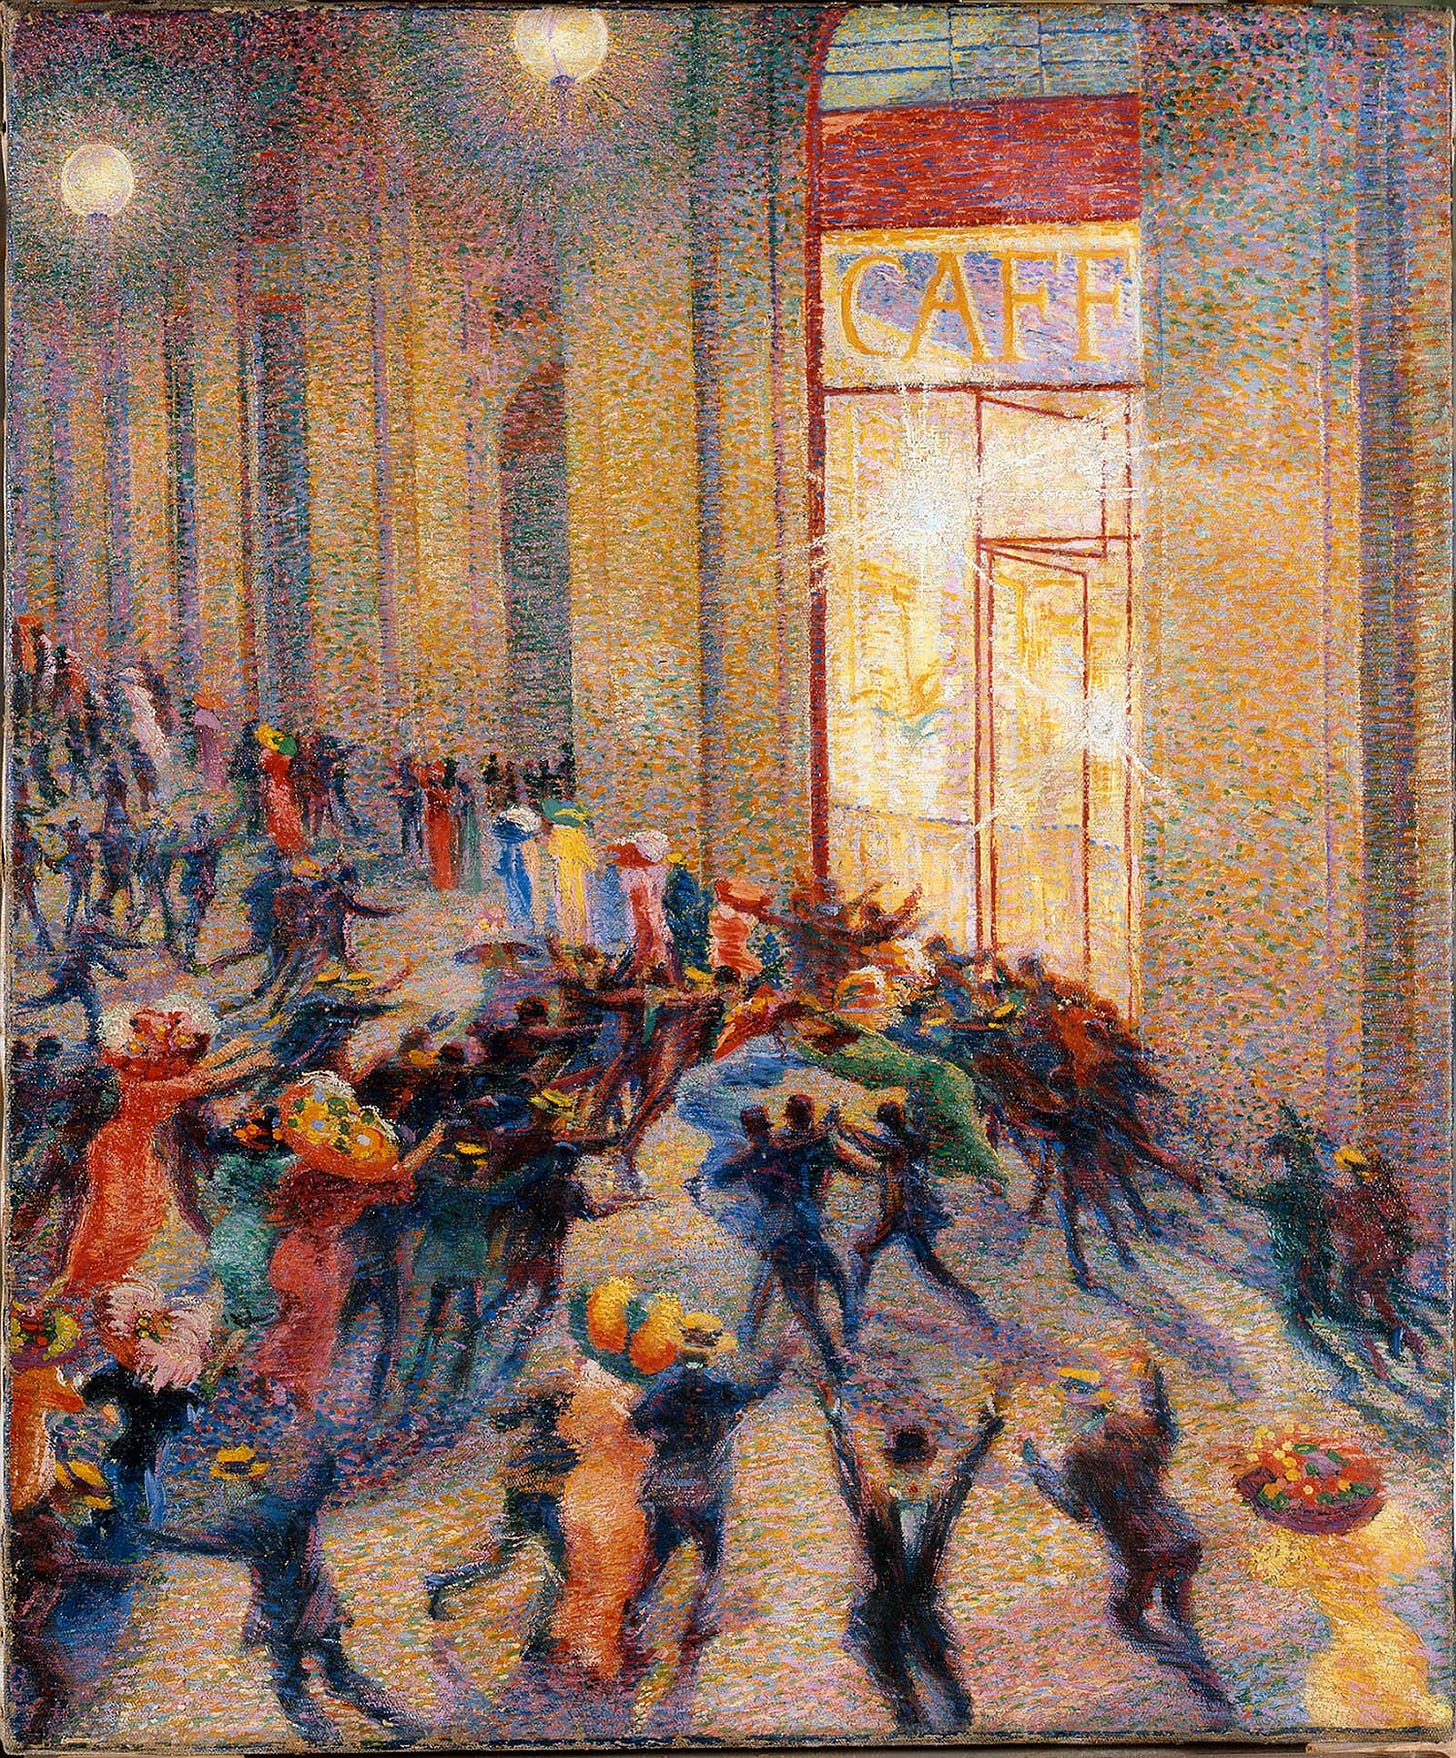 Riot in the Galleria - Umberto Boccioni